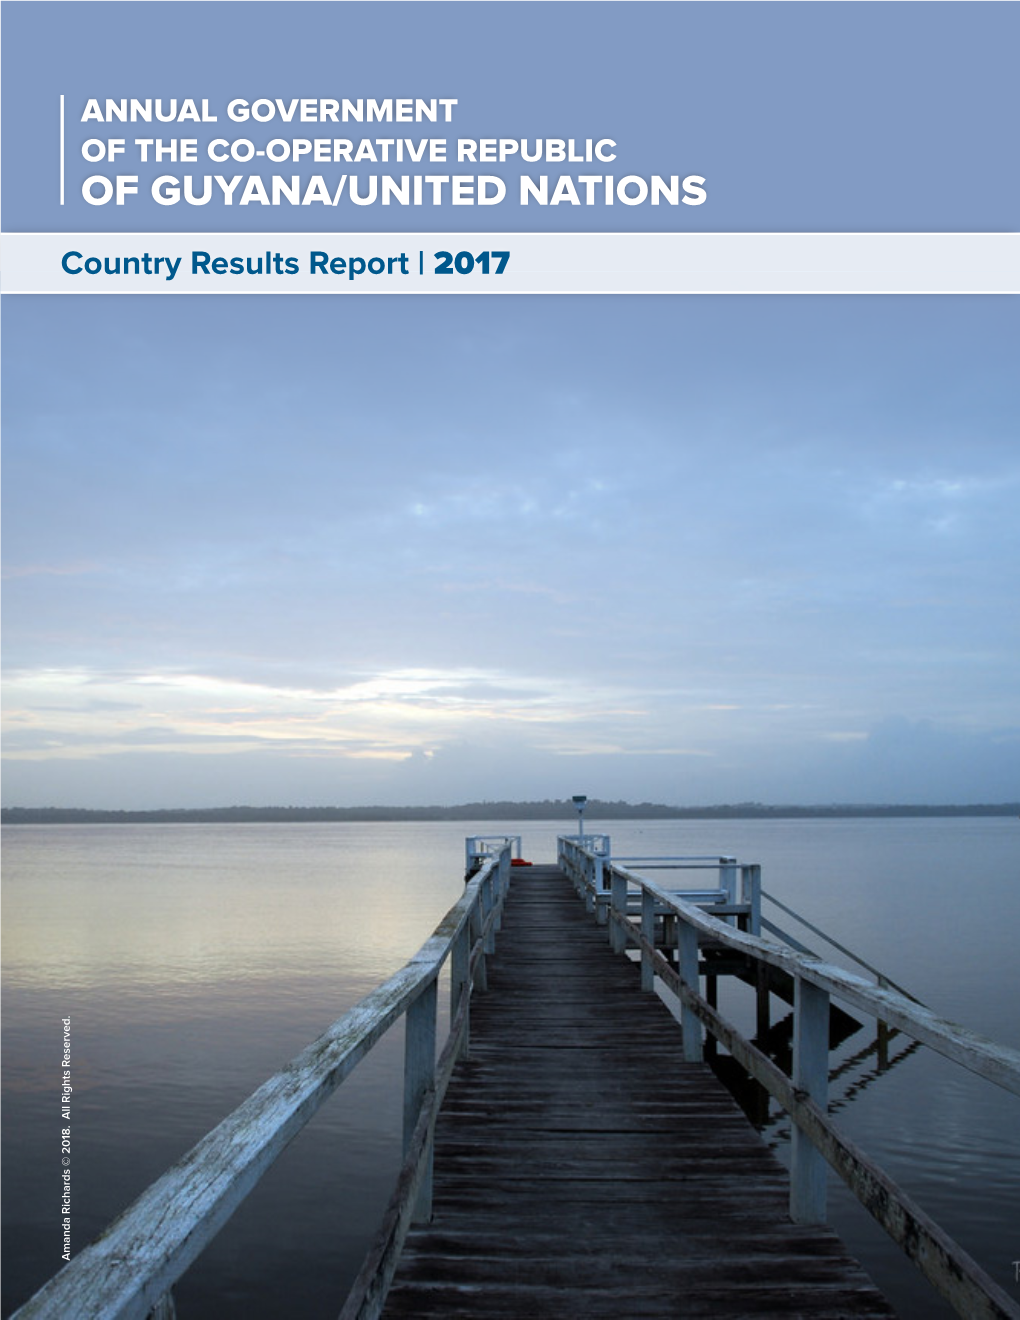 Of Guyana/United Nations